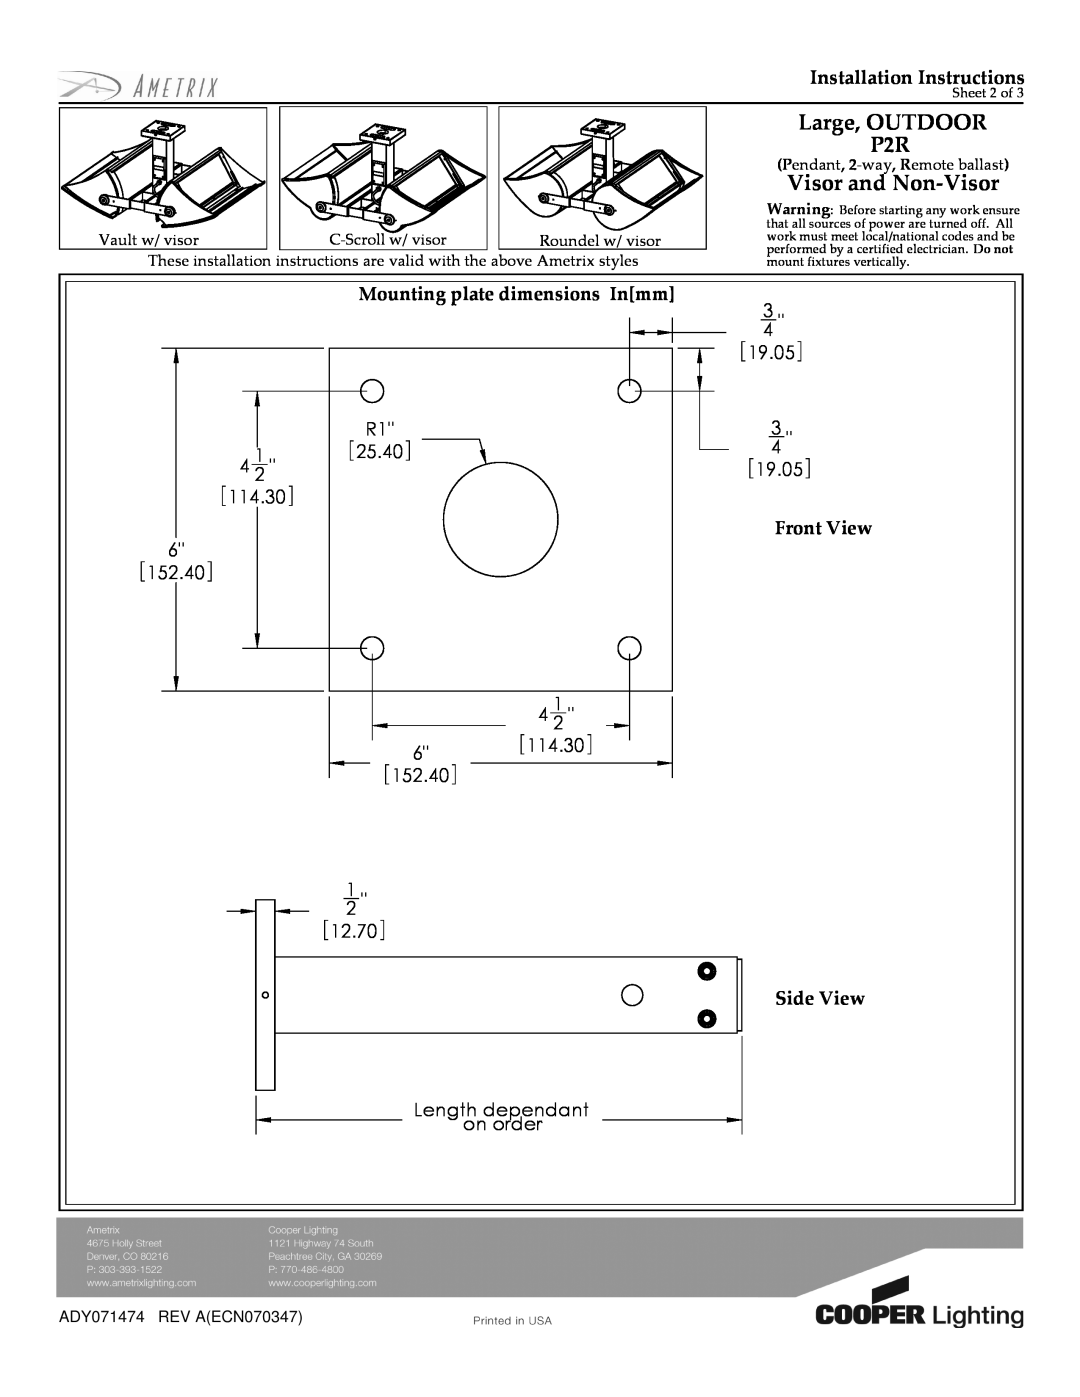 Cooper Lighting J/E-PSW-FX-02 Large, OUTDOOR P2R, Visor and Non-Visor, Installation Instructions, 12.70, ADY071474 